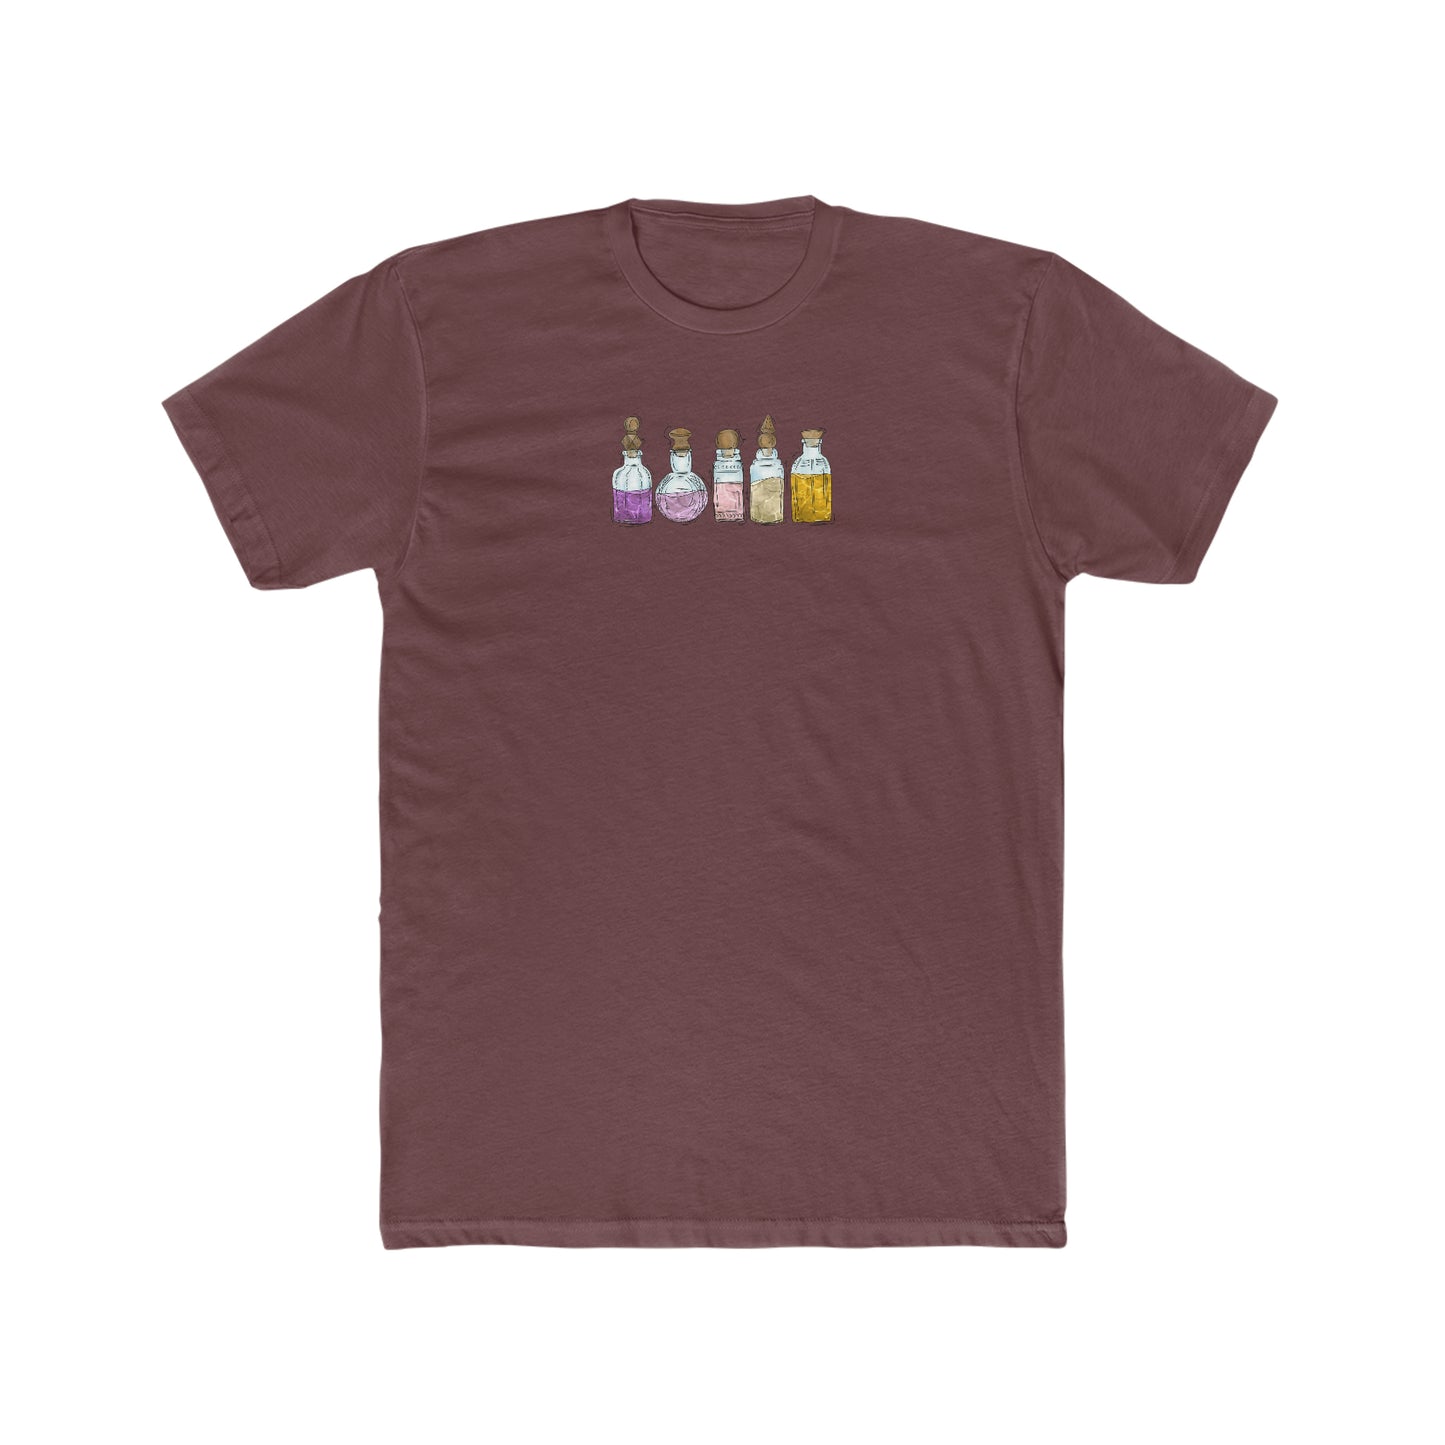 Trixic Pride Potion Bottles - Men's T-Shirt